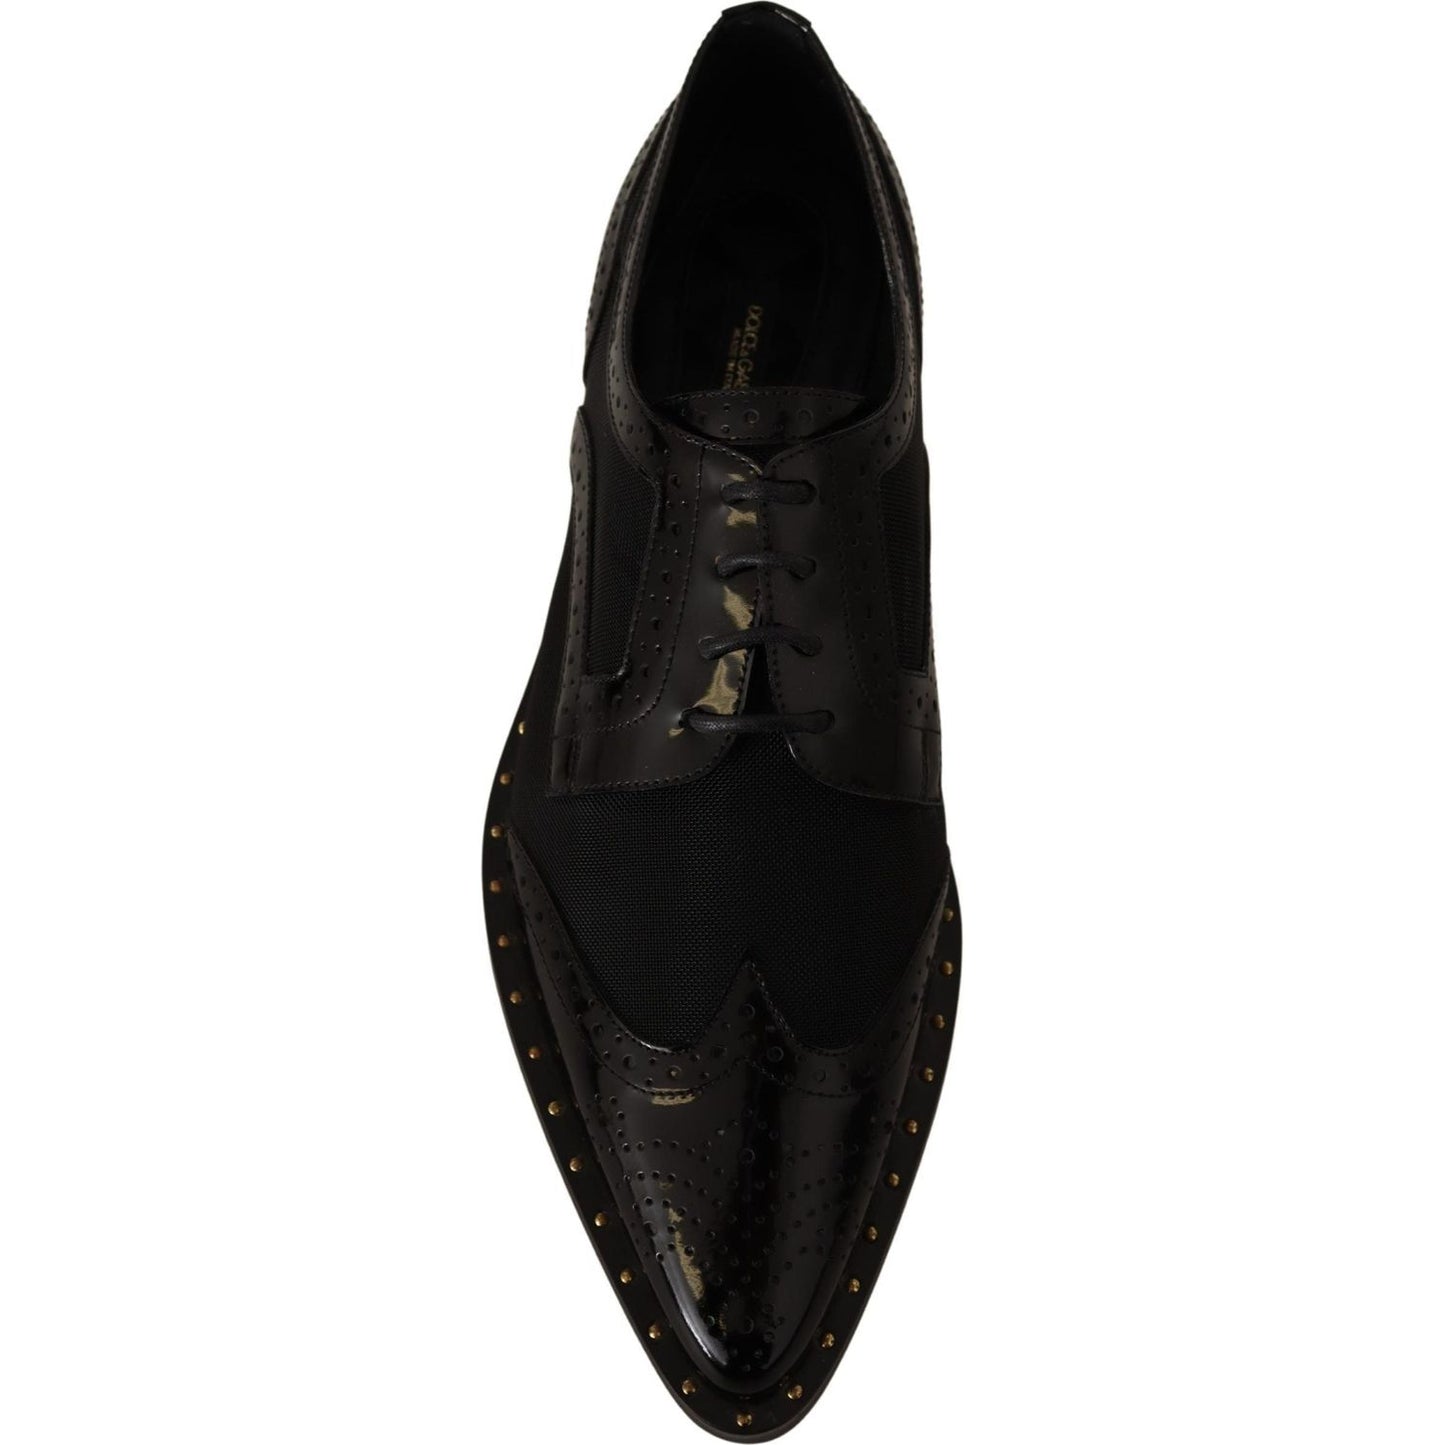 Dolce & Gabbana Elegant Gold-Trimmed Black Oxford Lace-Ups black-leather-broques-sheer-wingtip-shoes